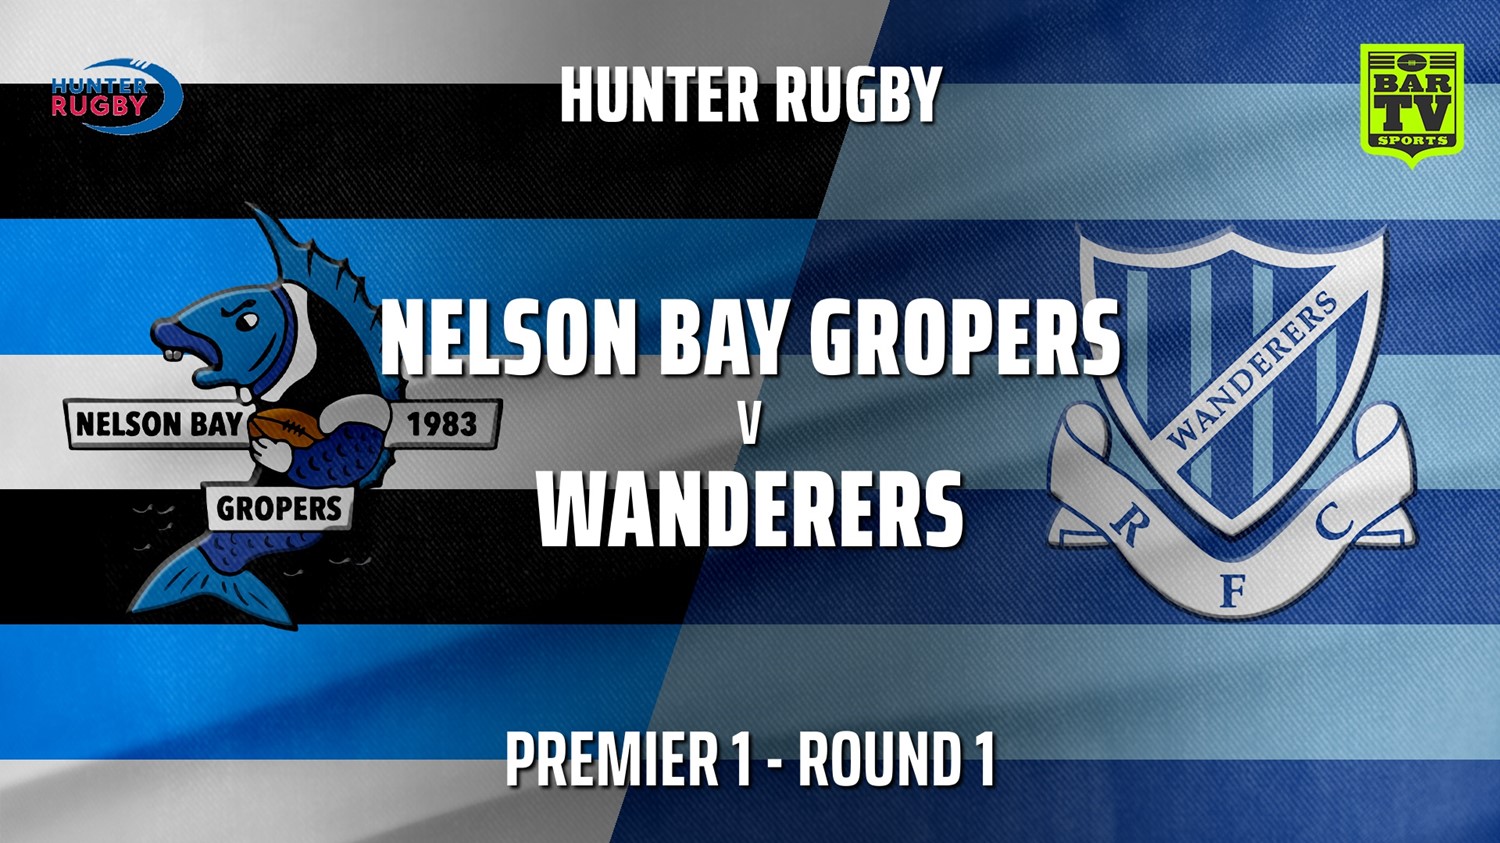 HRU Round 1 - Premier 1 - Nelson Bay Gropers v Wanderers Slate Image